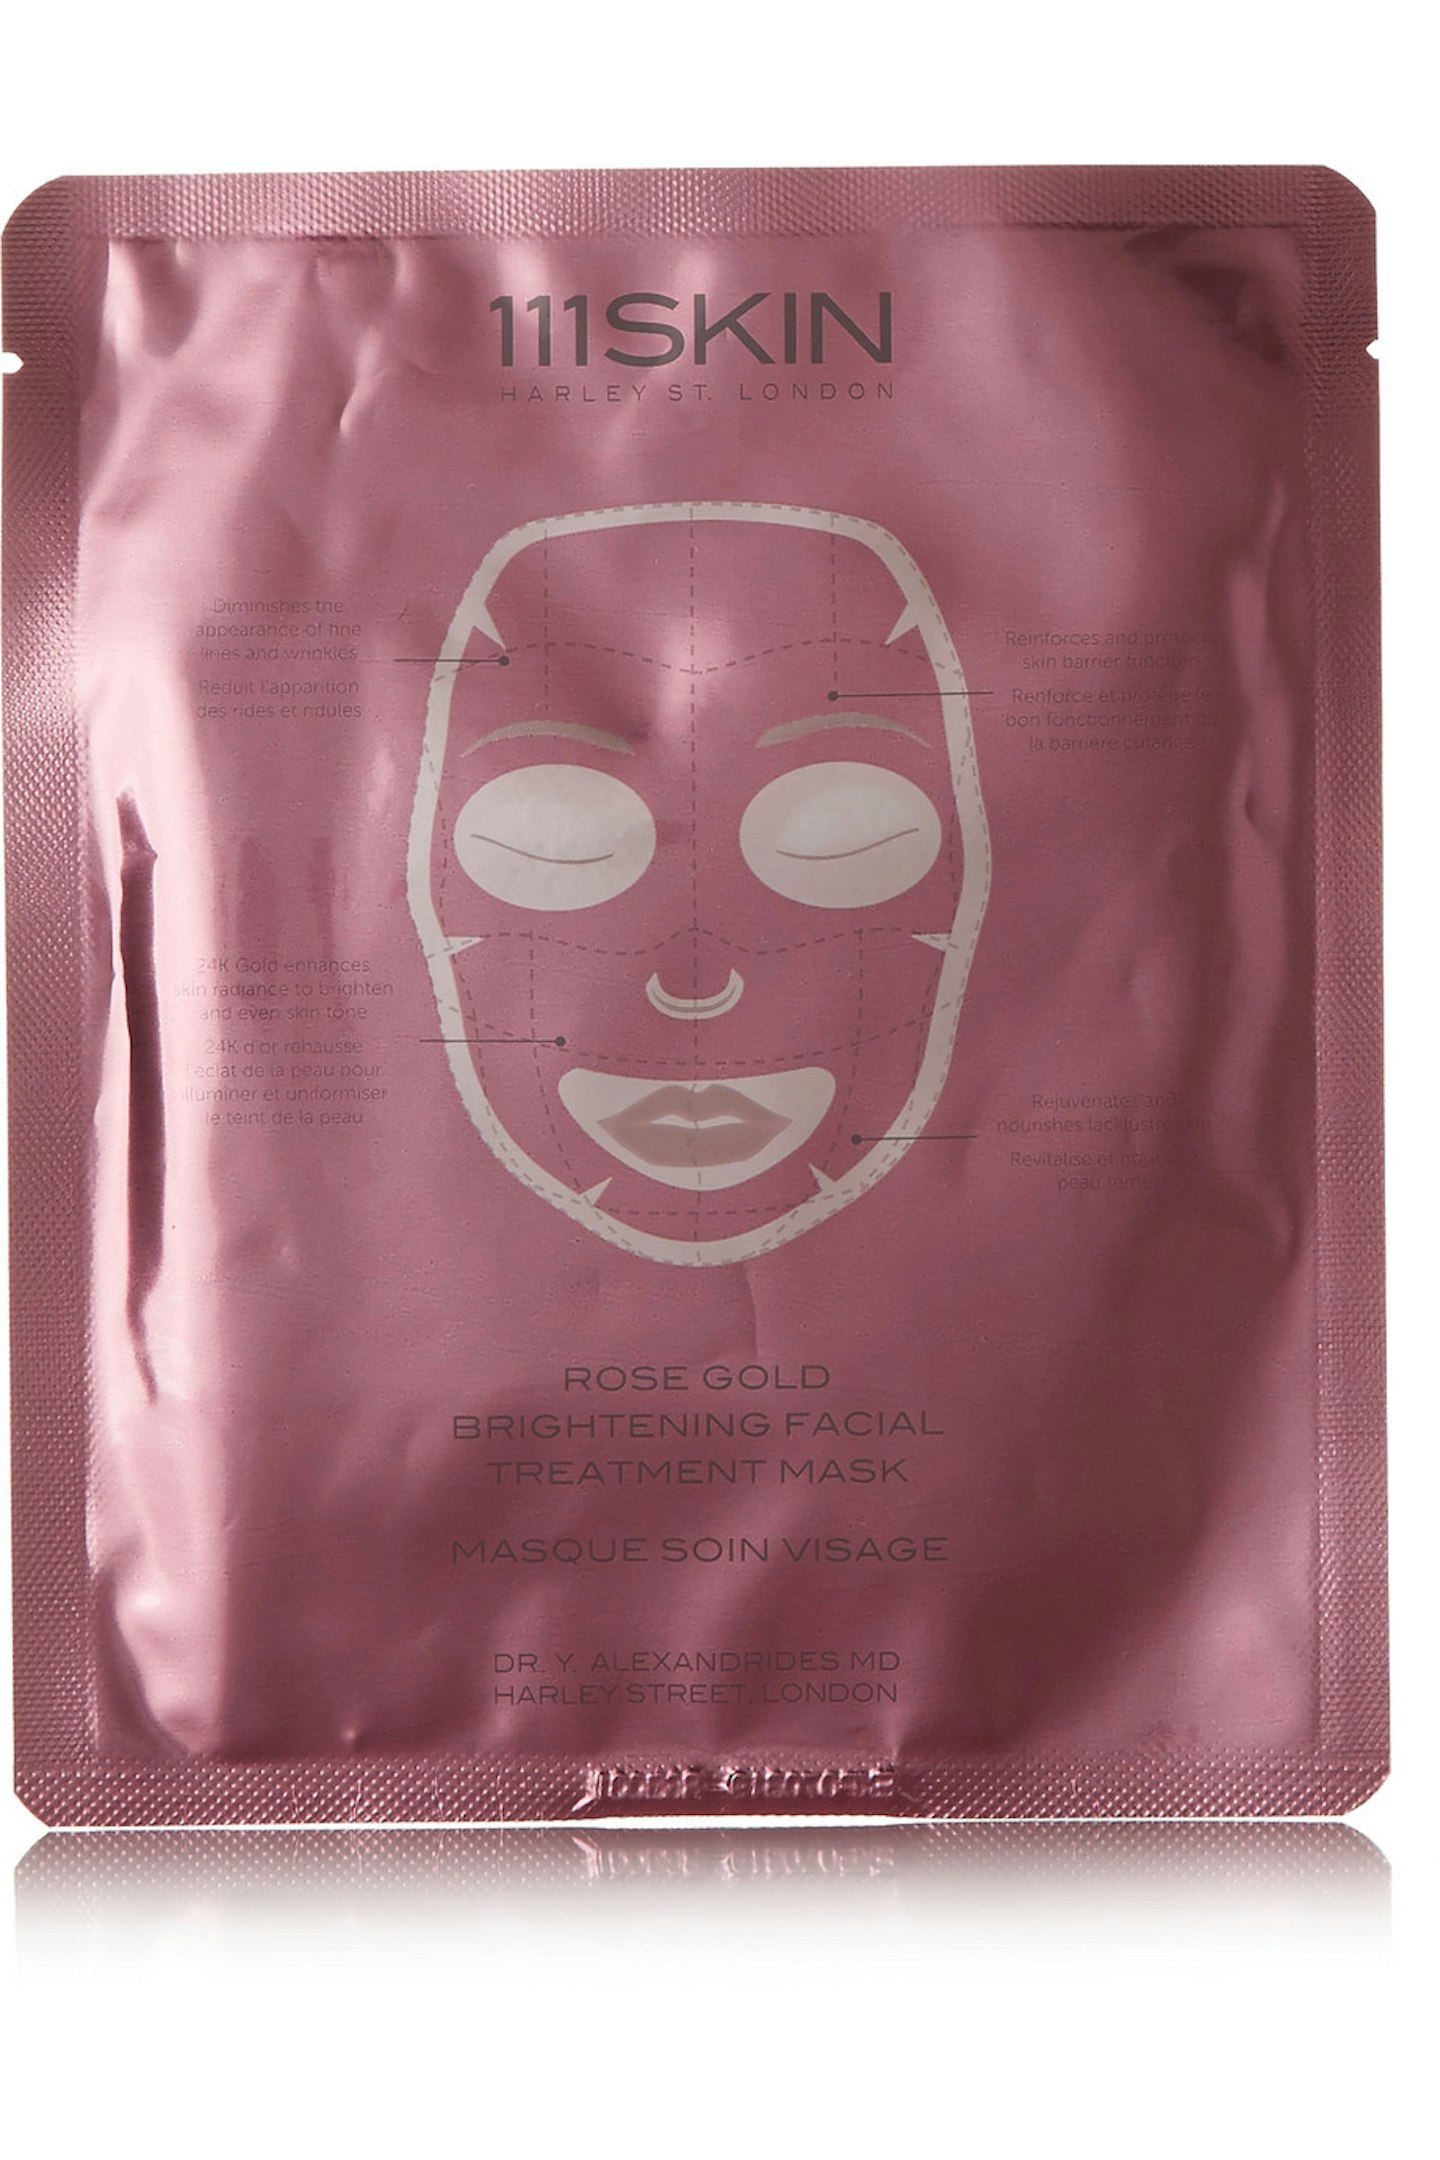 111Skin, Rose Gold Brightening Facial Treatment Mask, £20